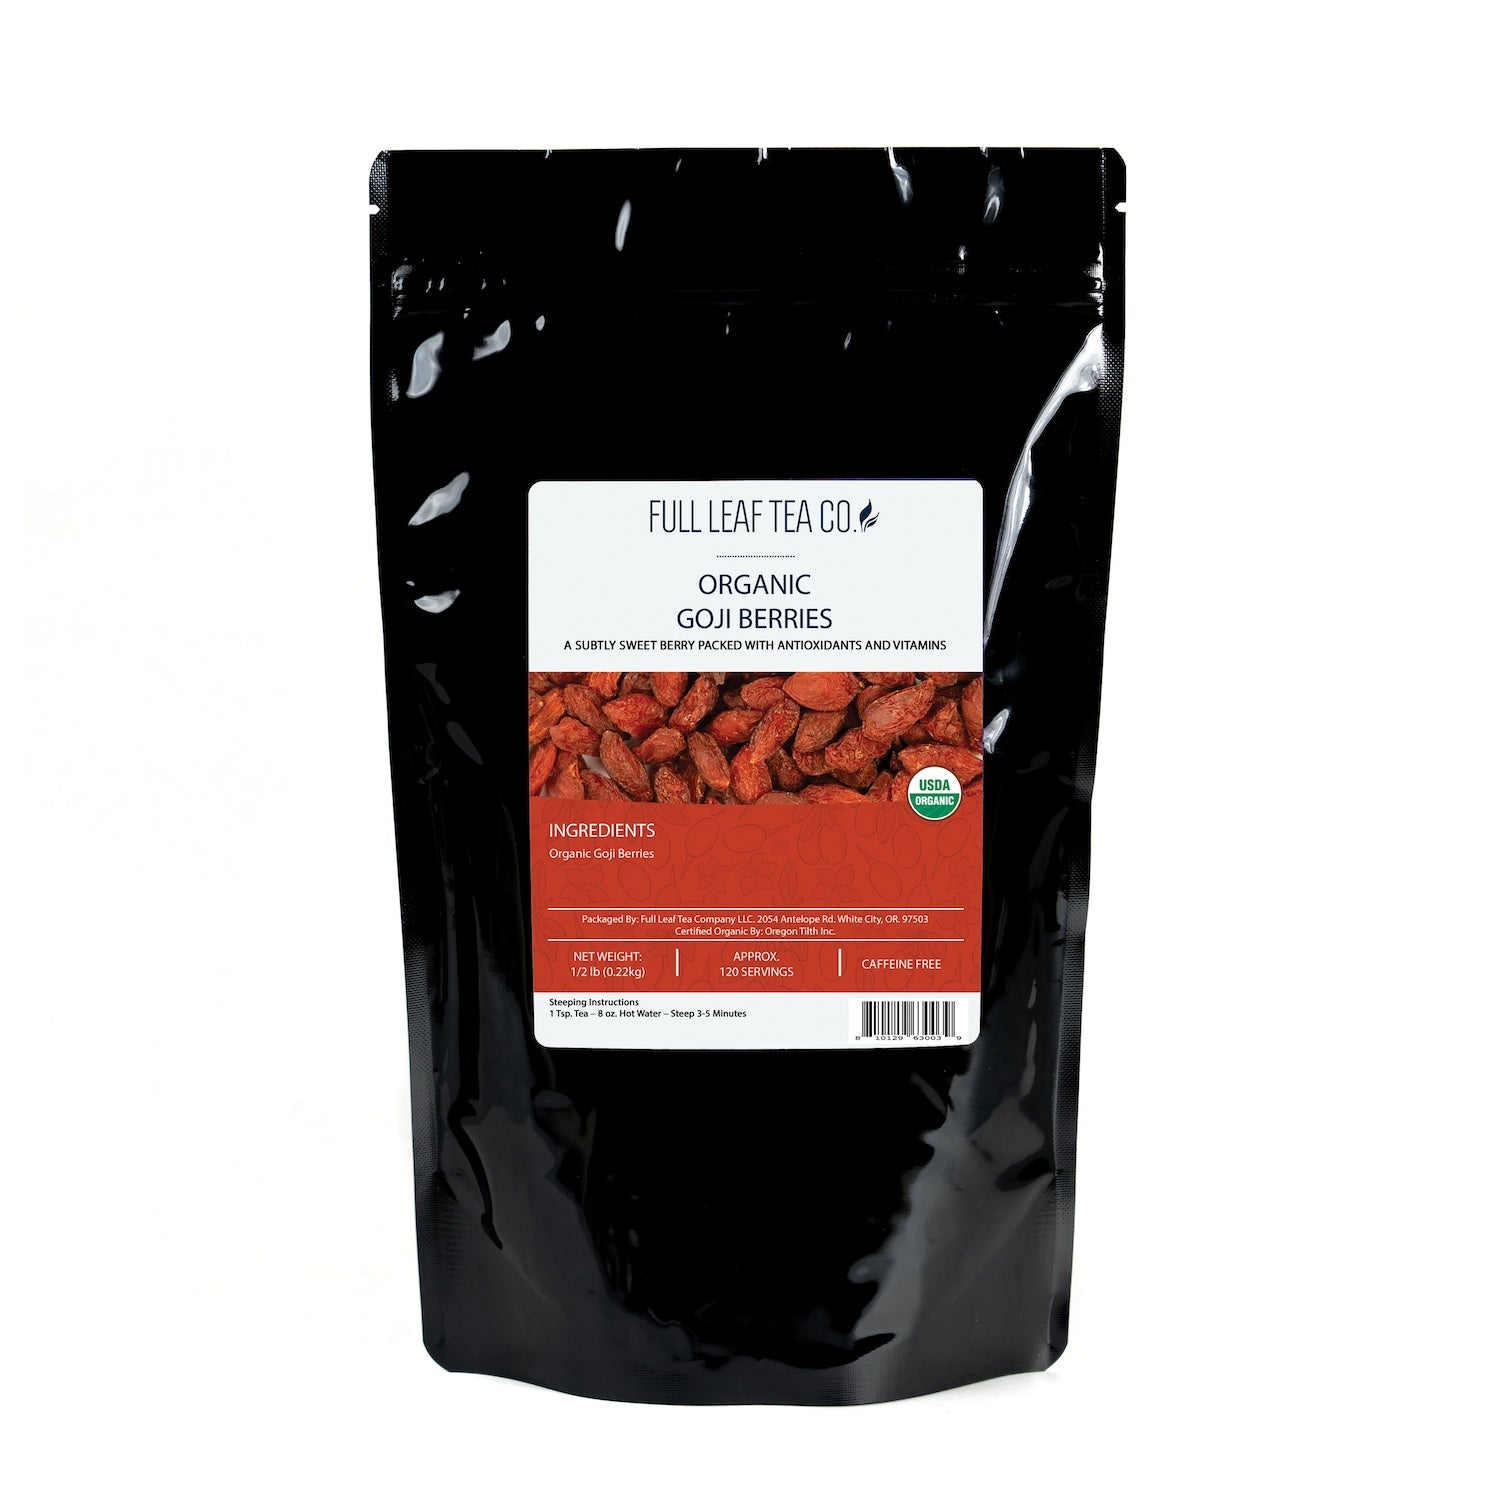 Organic Goji Berries - Loose Leaf Tea - Full Leaf Tea Company